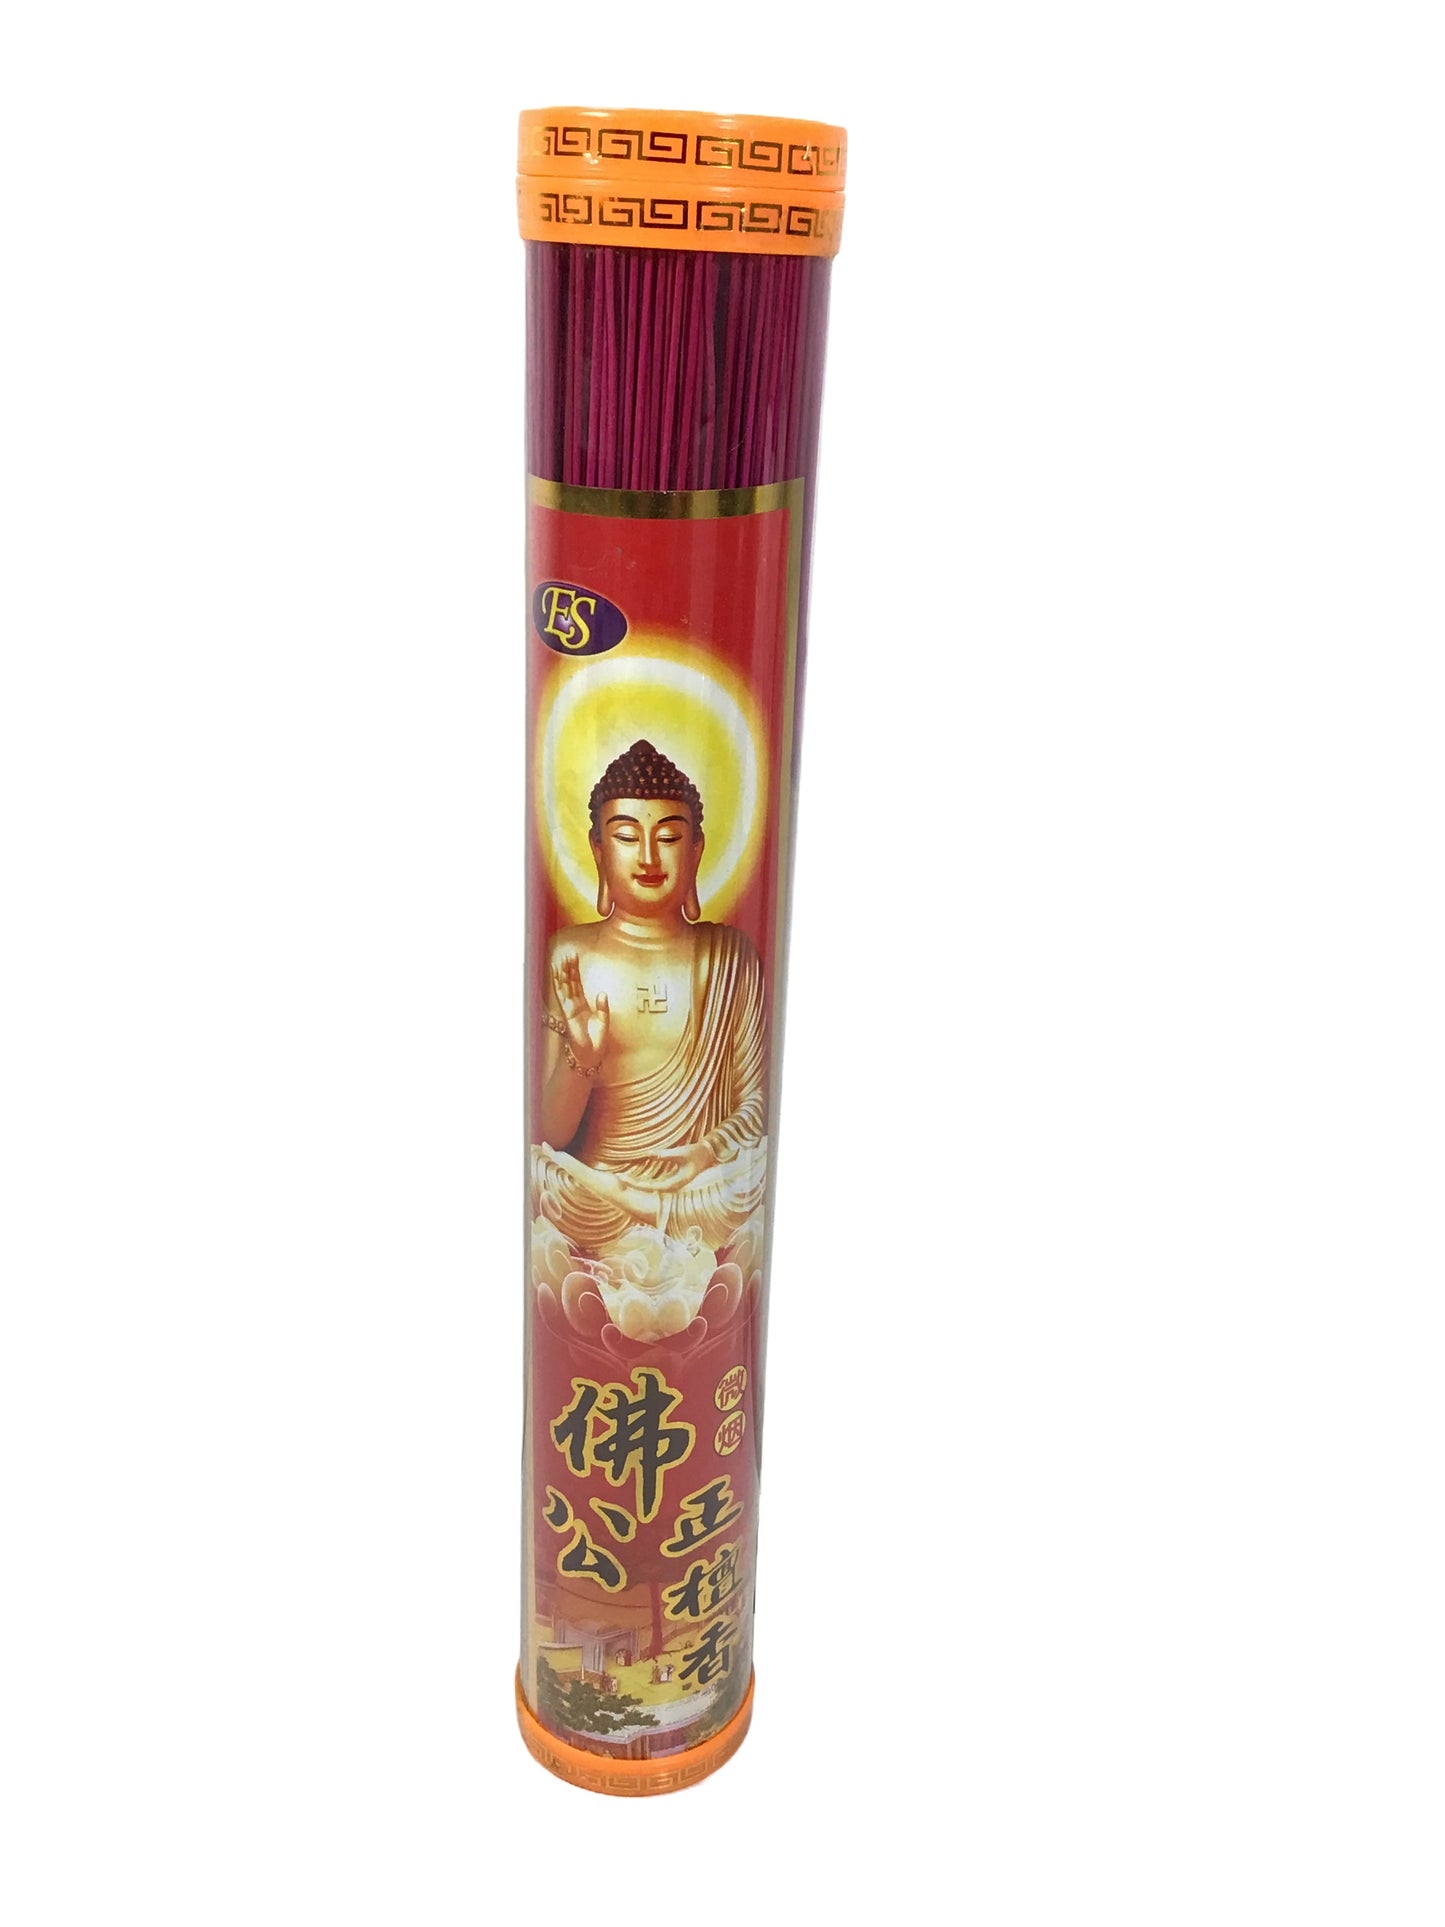 Sandalwood Joss Incense Sticks for the Buddha - 32cm 佛公正檀香 微烟